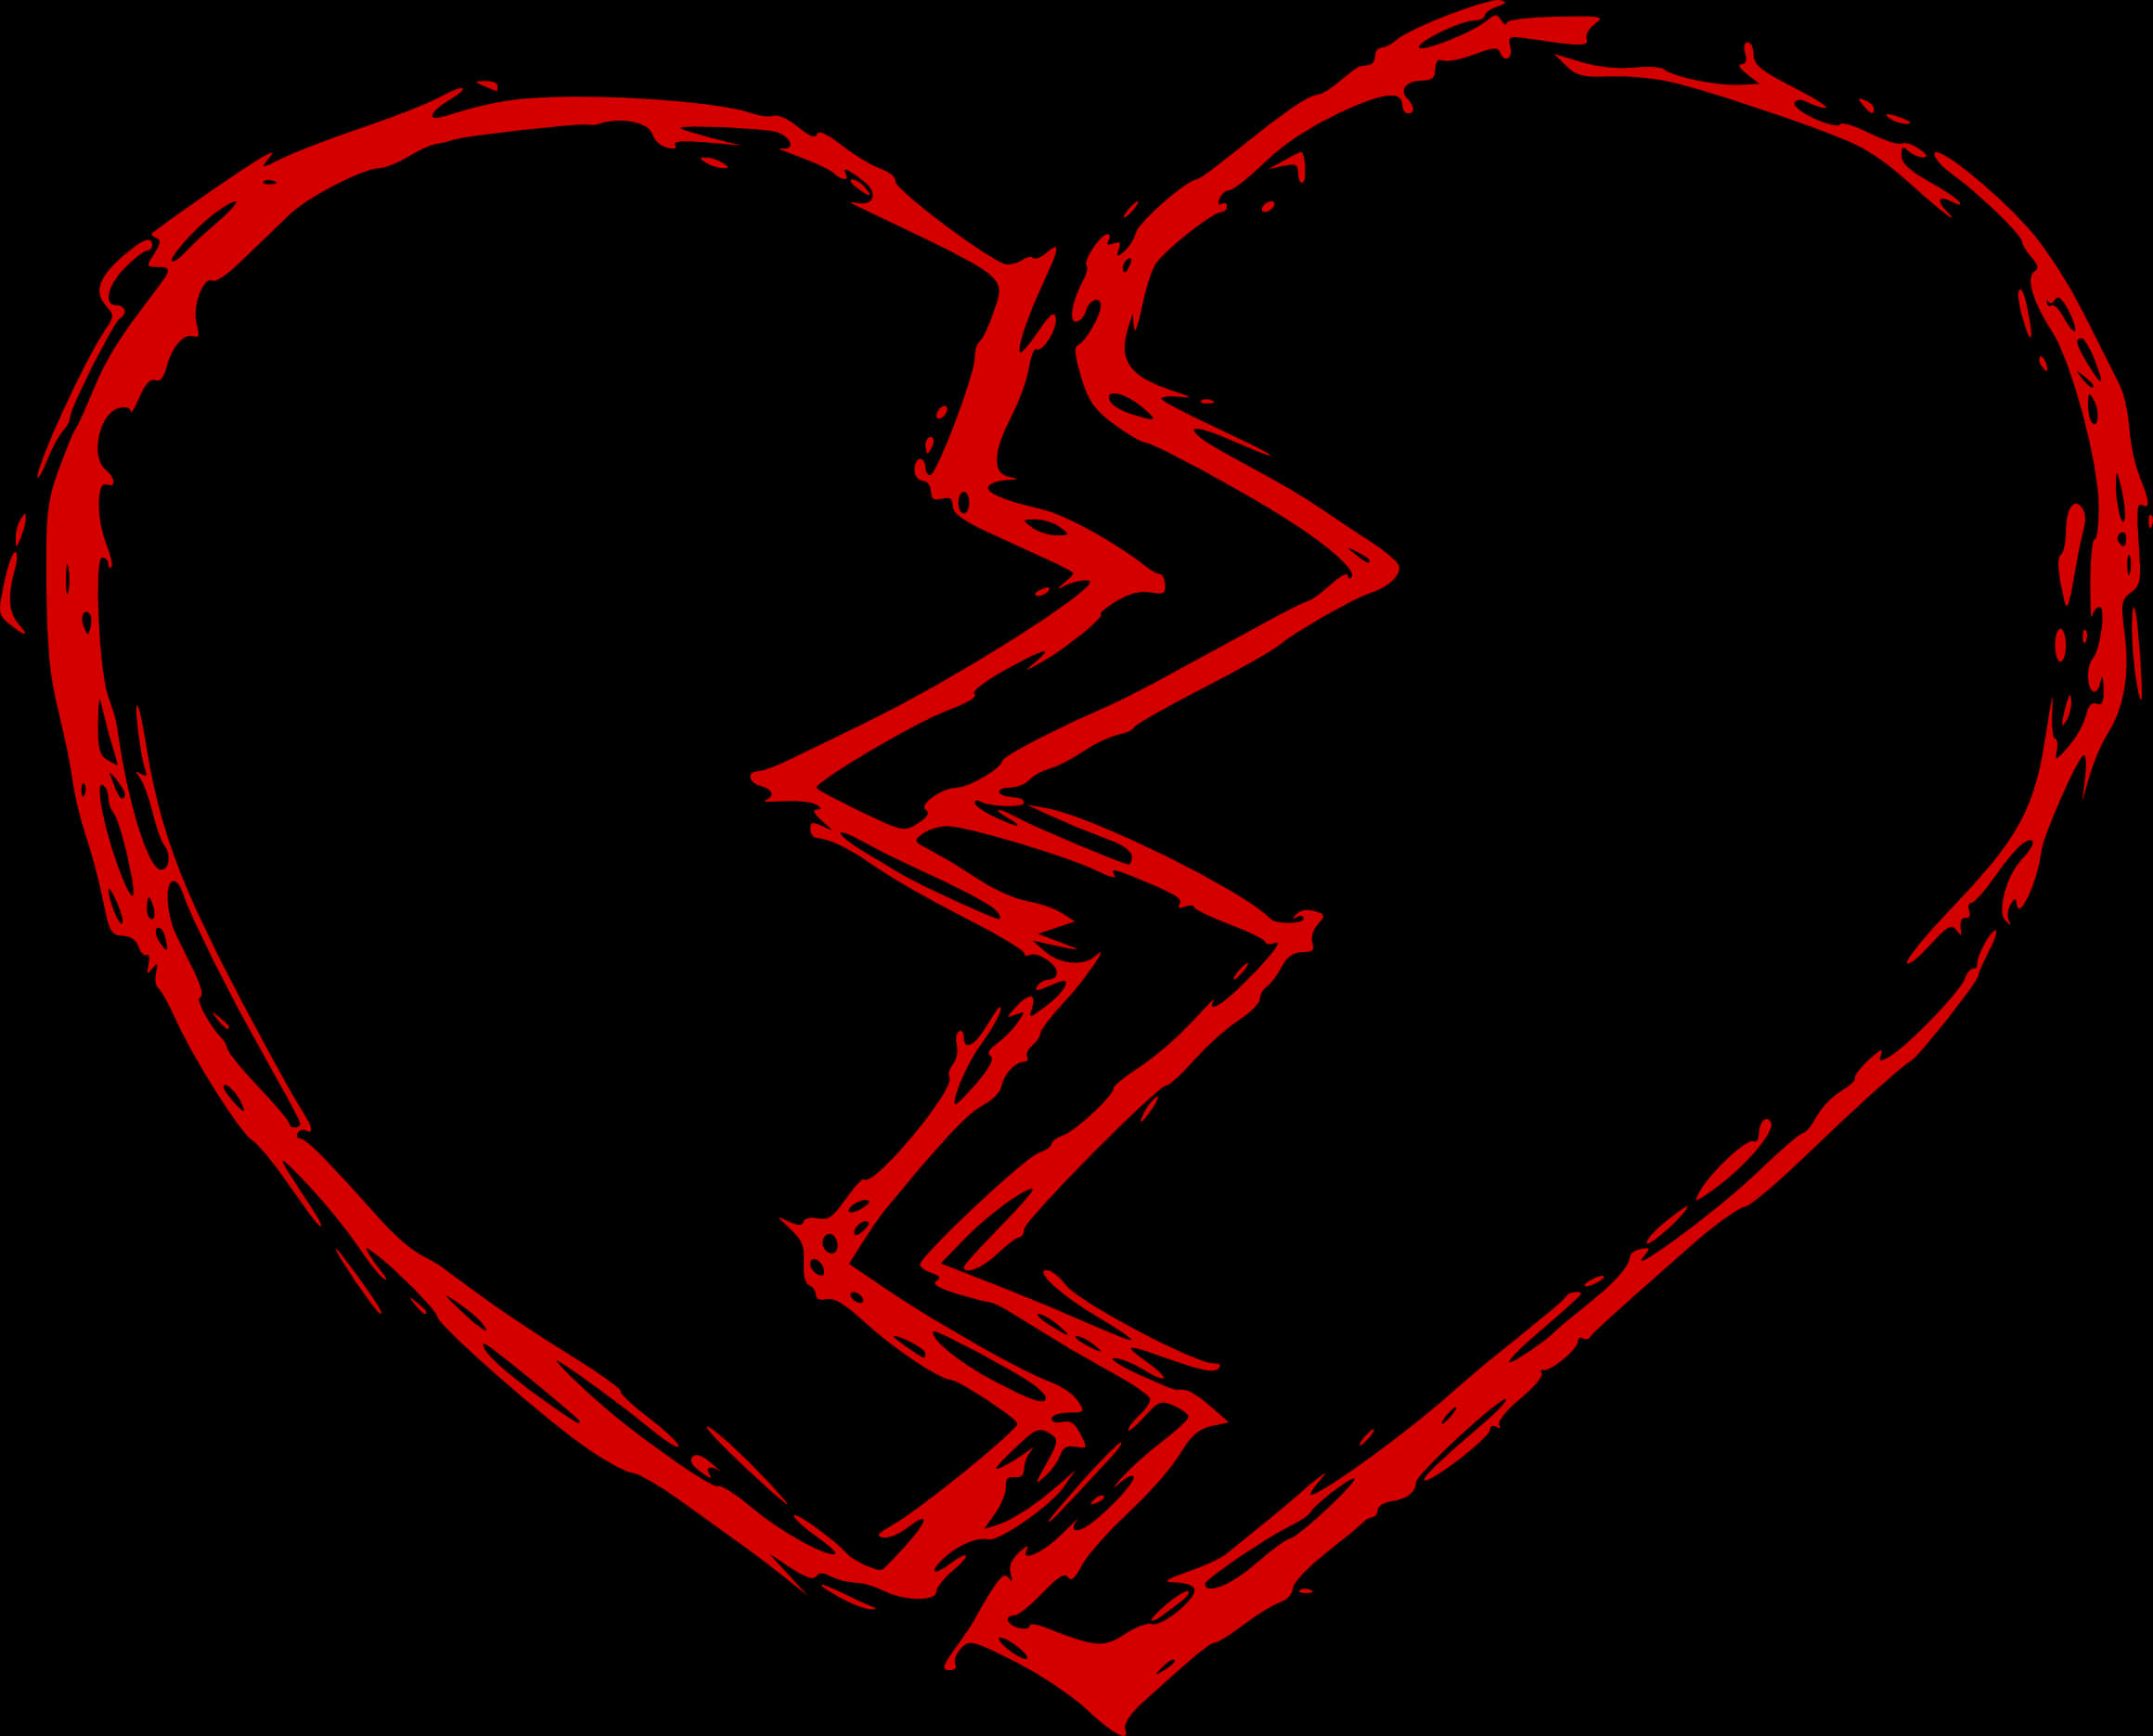 Messy Sketch Broken Heart Outline